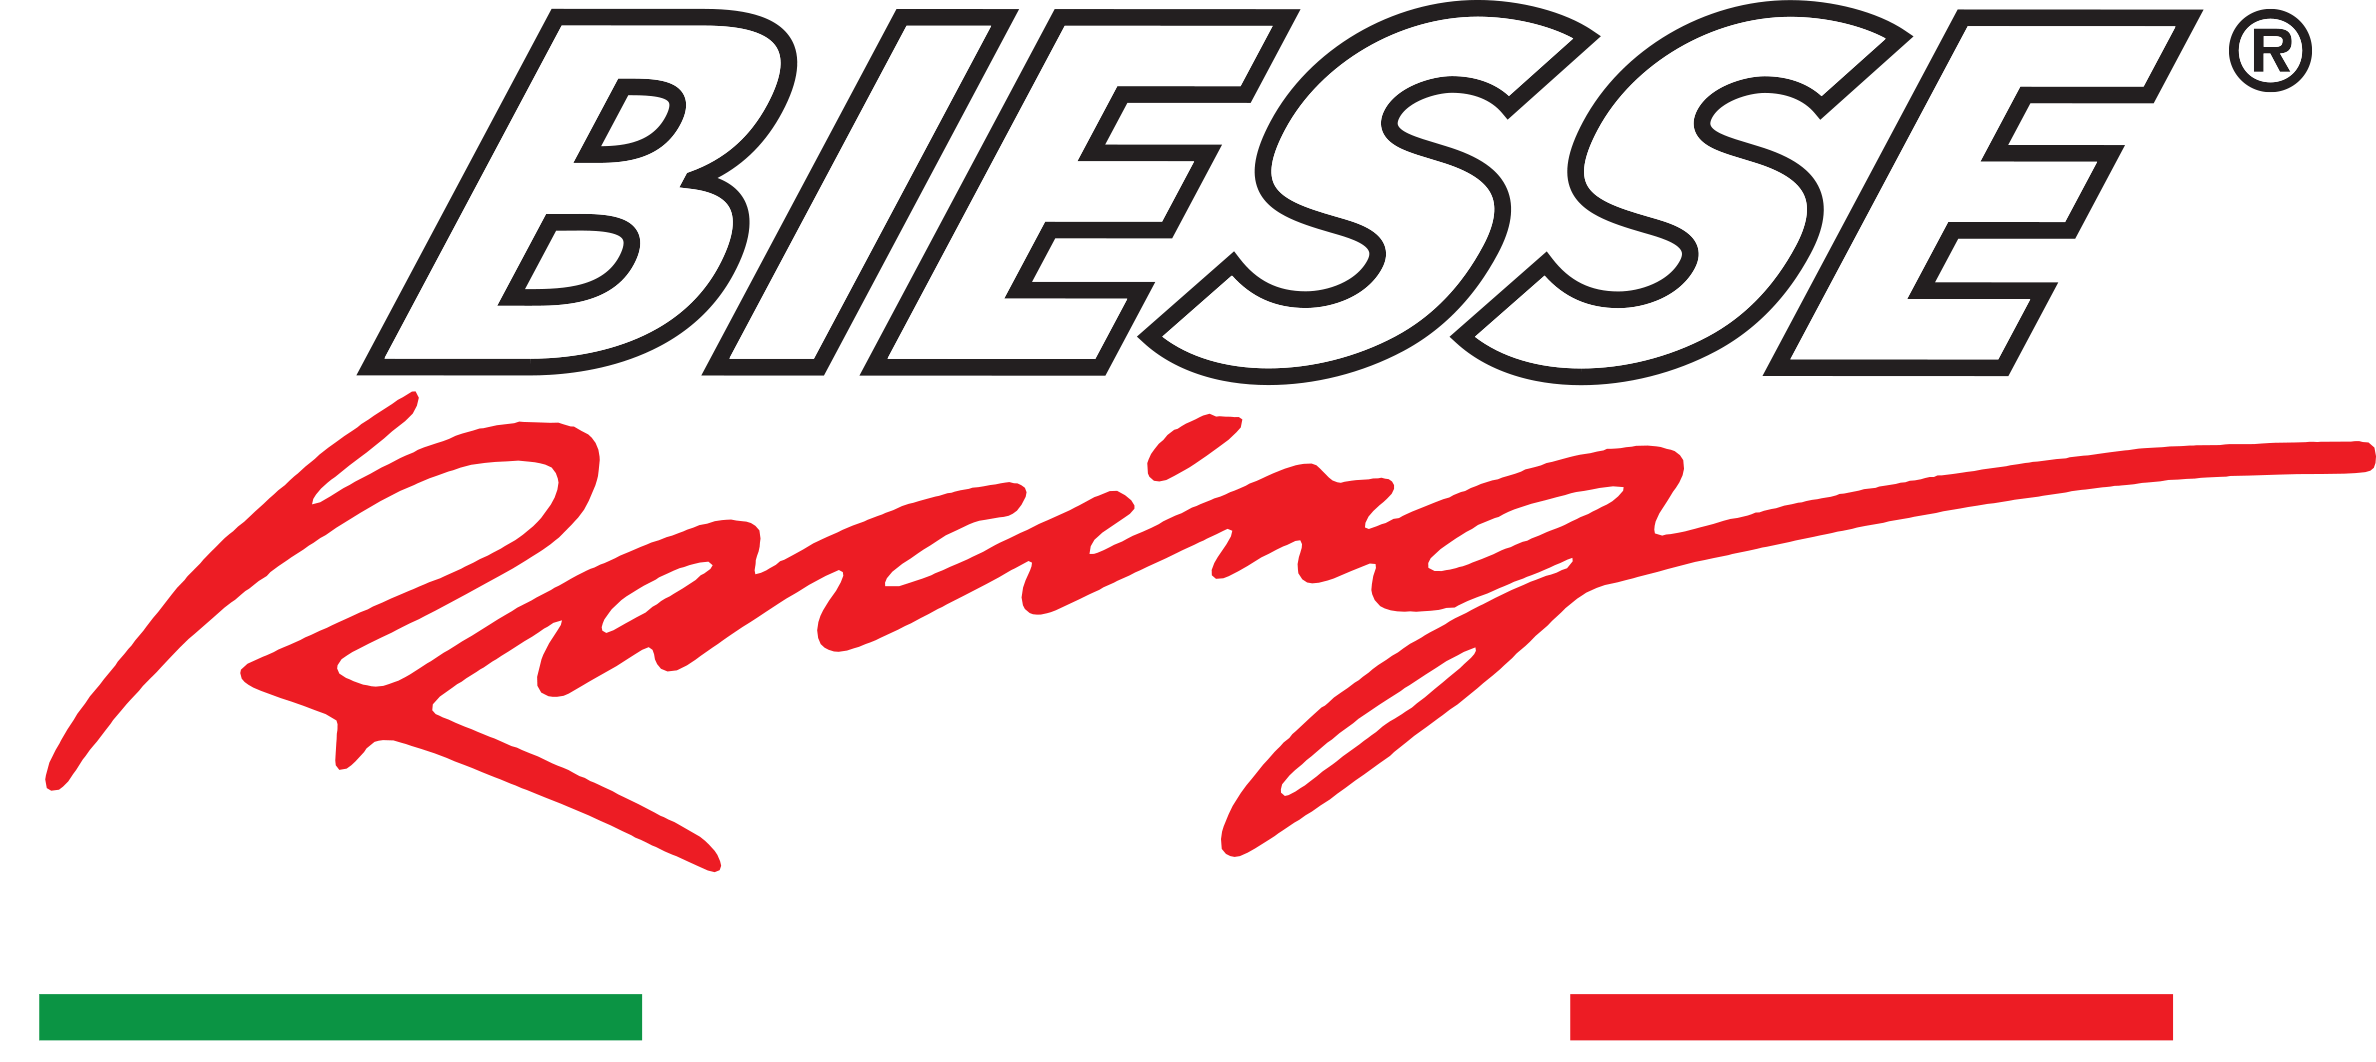 Biesse Racing